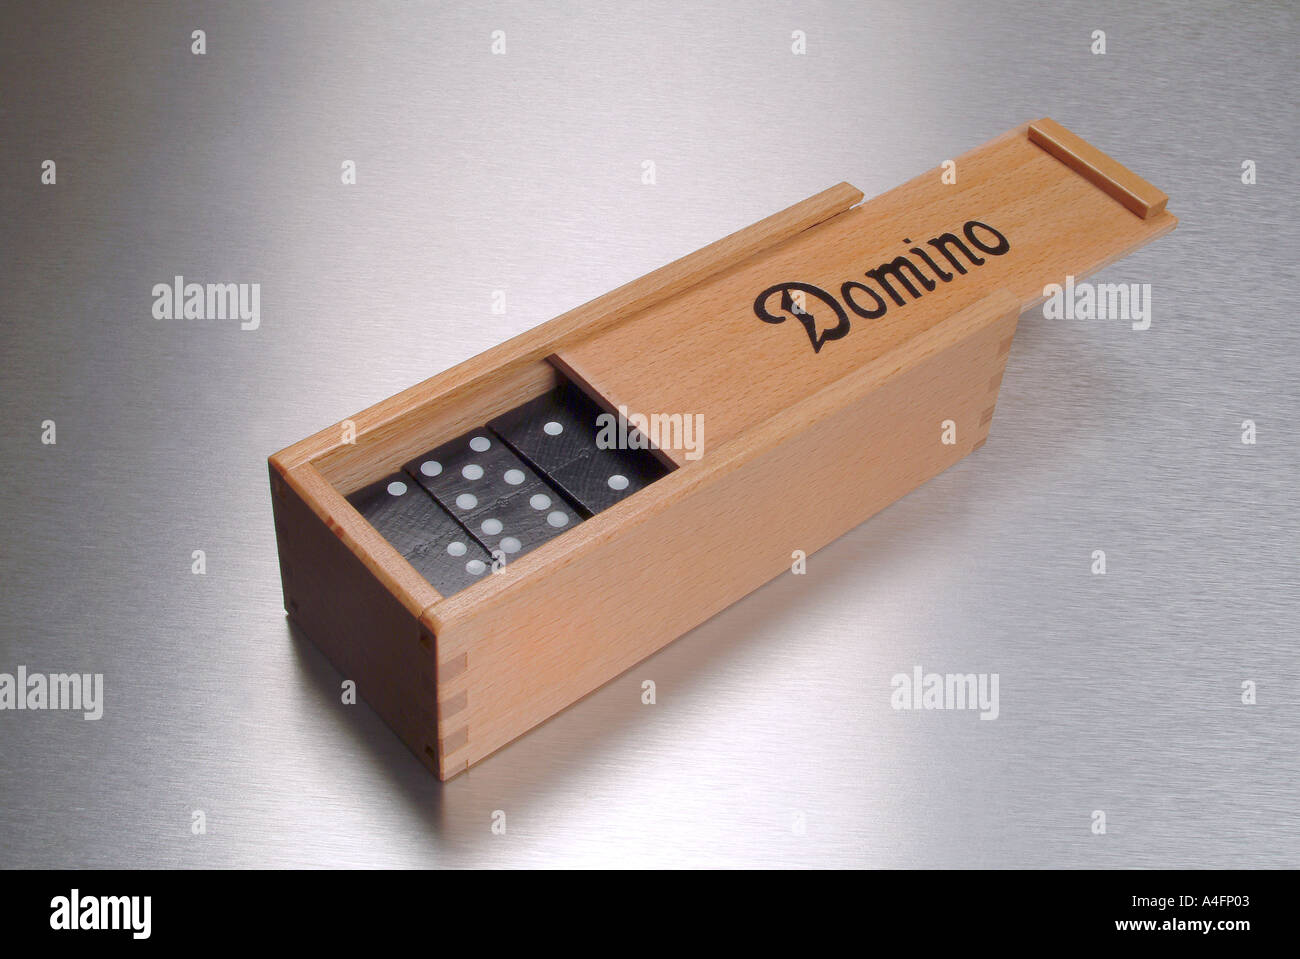 Domino Dominospiel Stock Photo